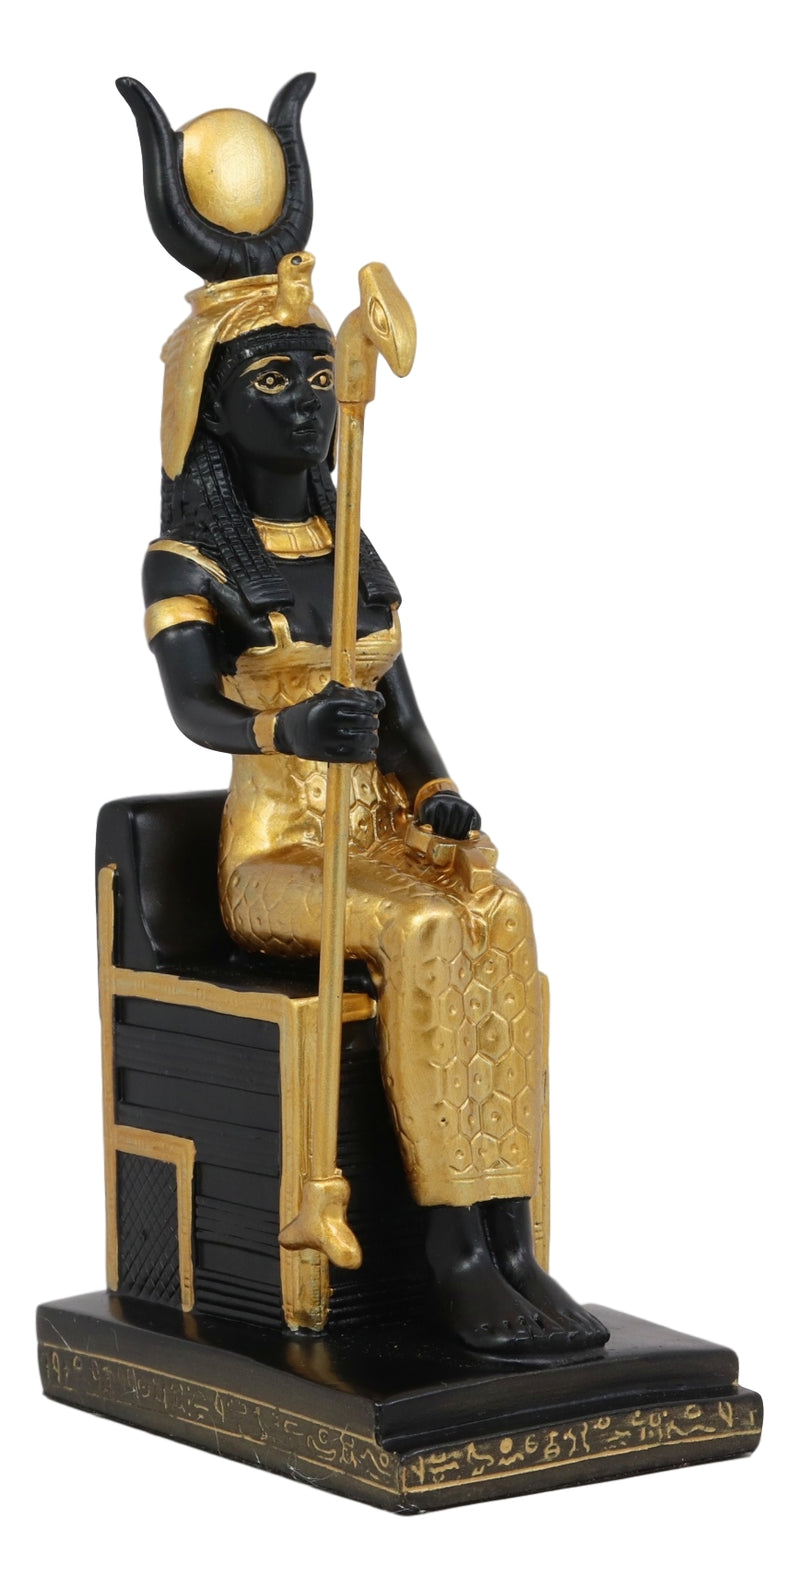 Egyptian Goddess Of Magic Motherhood And Life Isis Seated On Throne Statue Decor